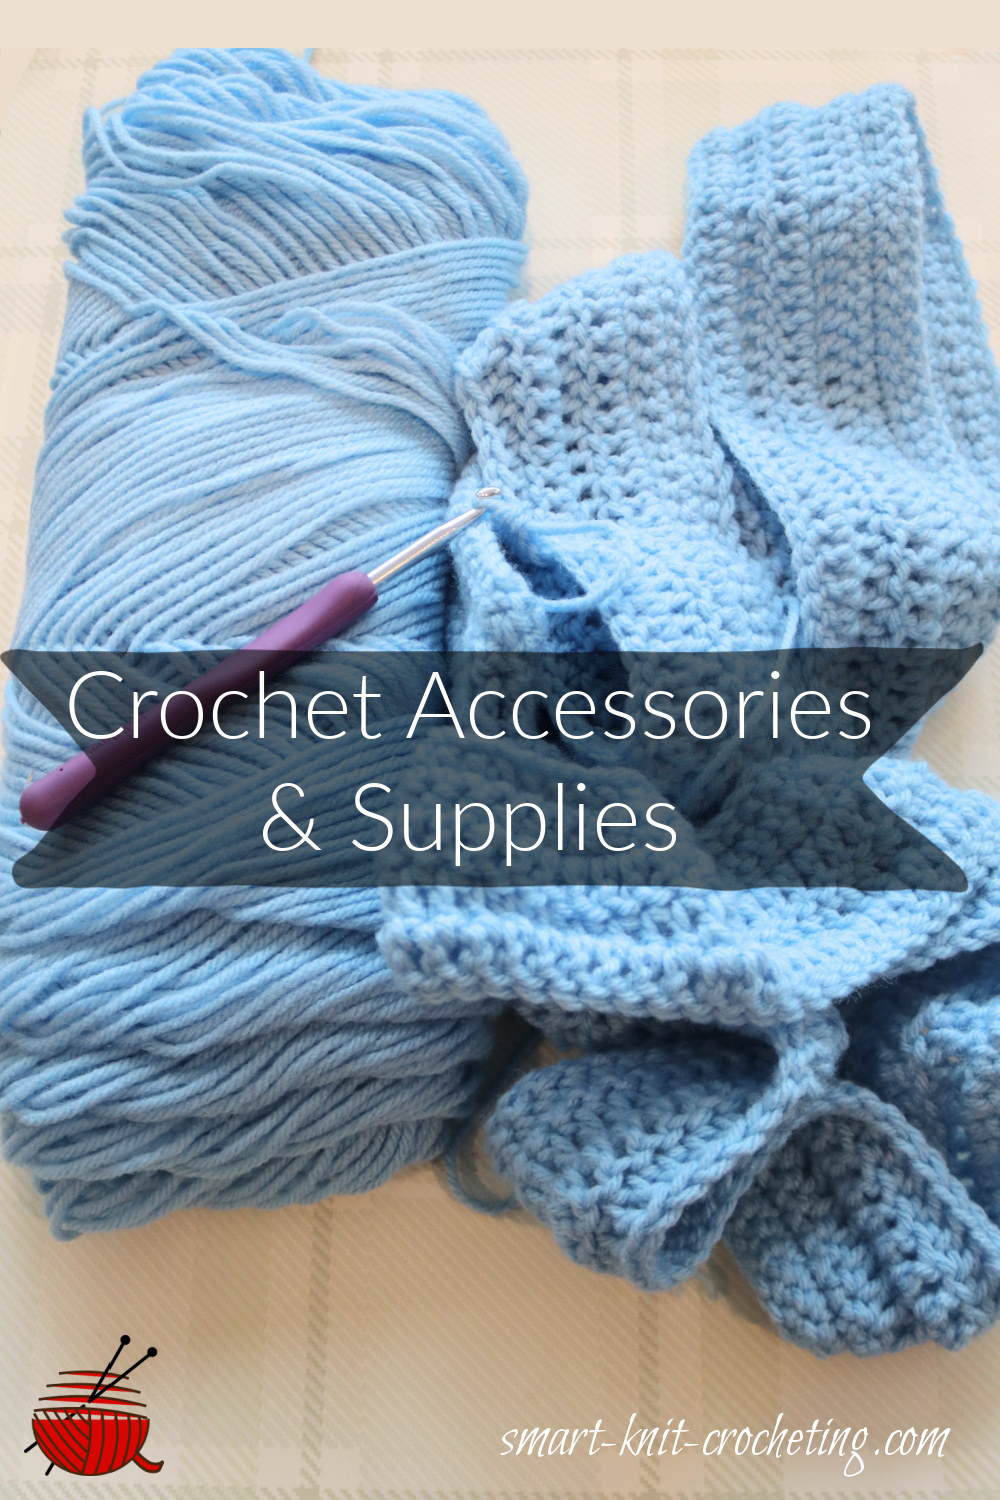  Crochet Accessories